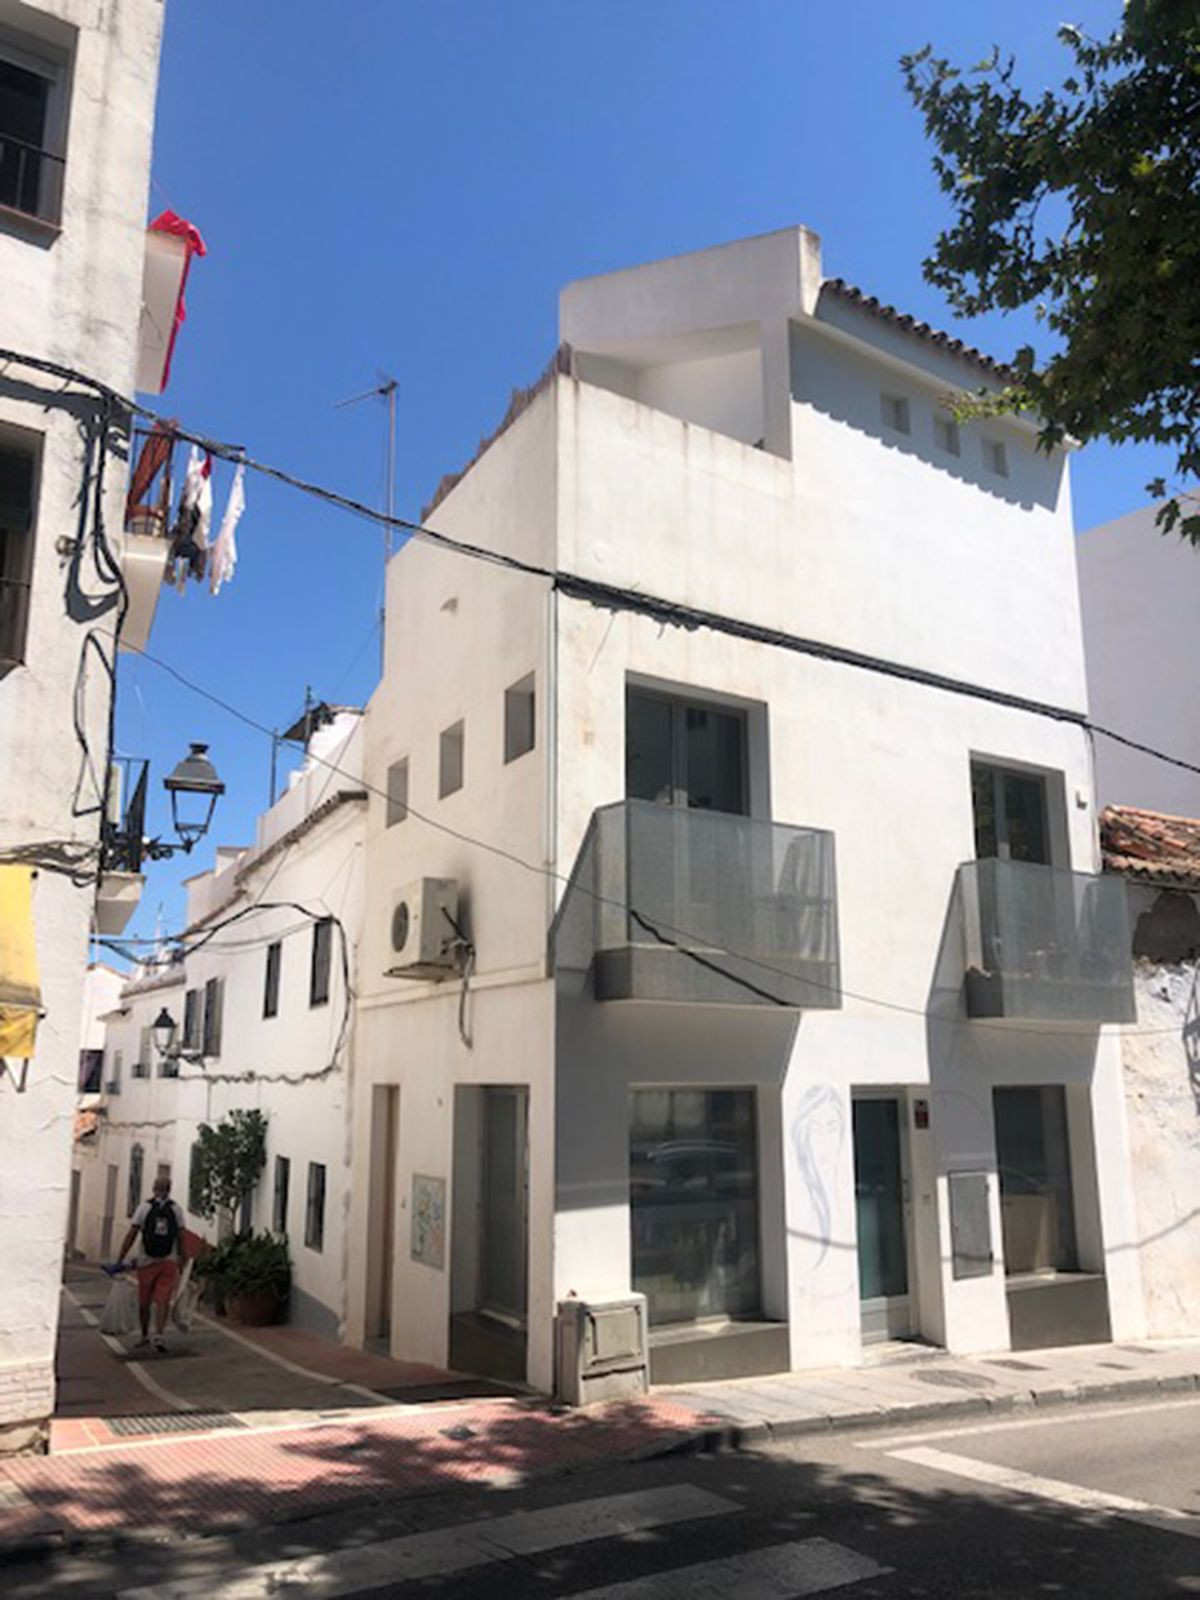 1 Bedroom Penthouse Duplex For Sale Marbella, Costa del Sol - HP4143628